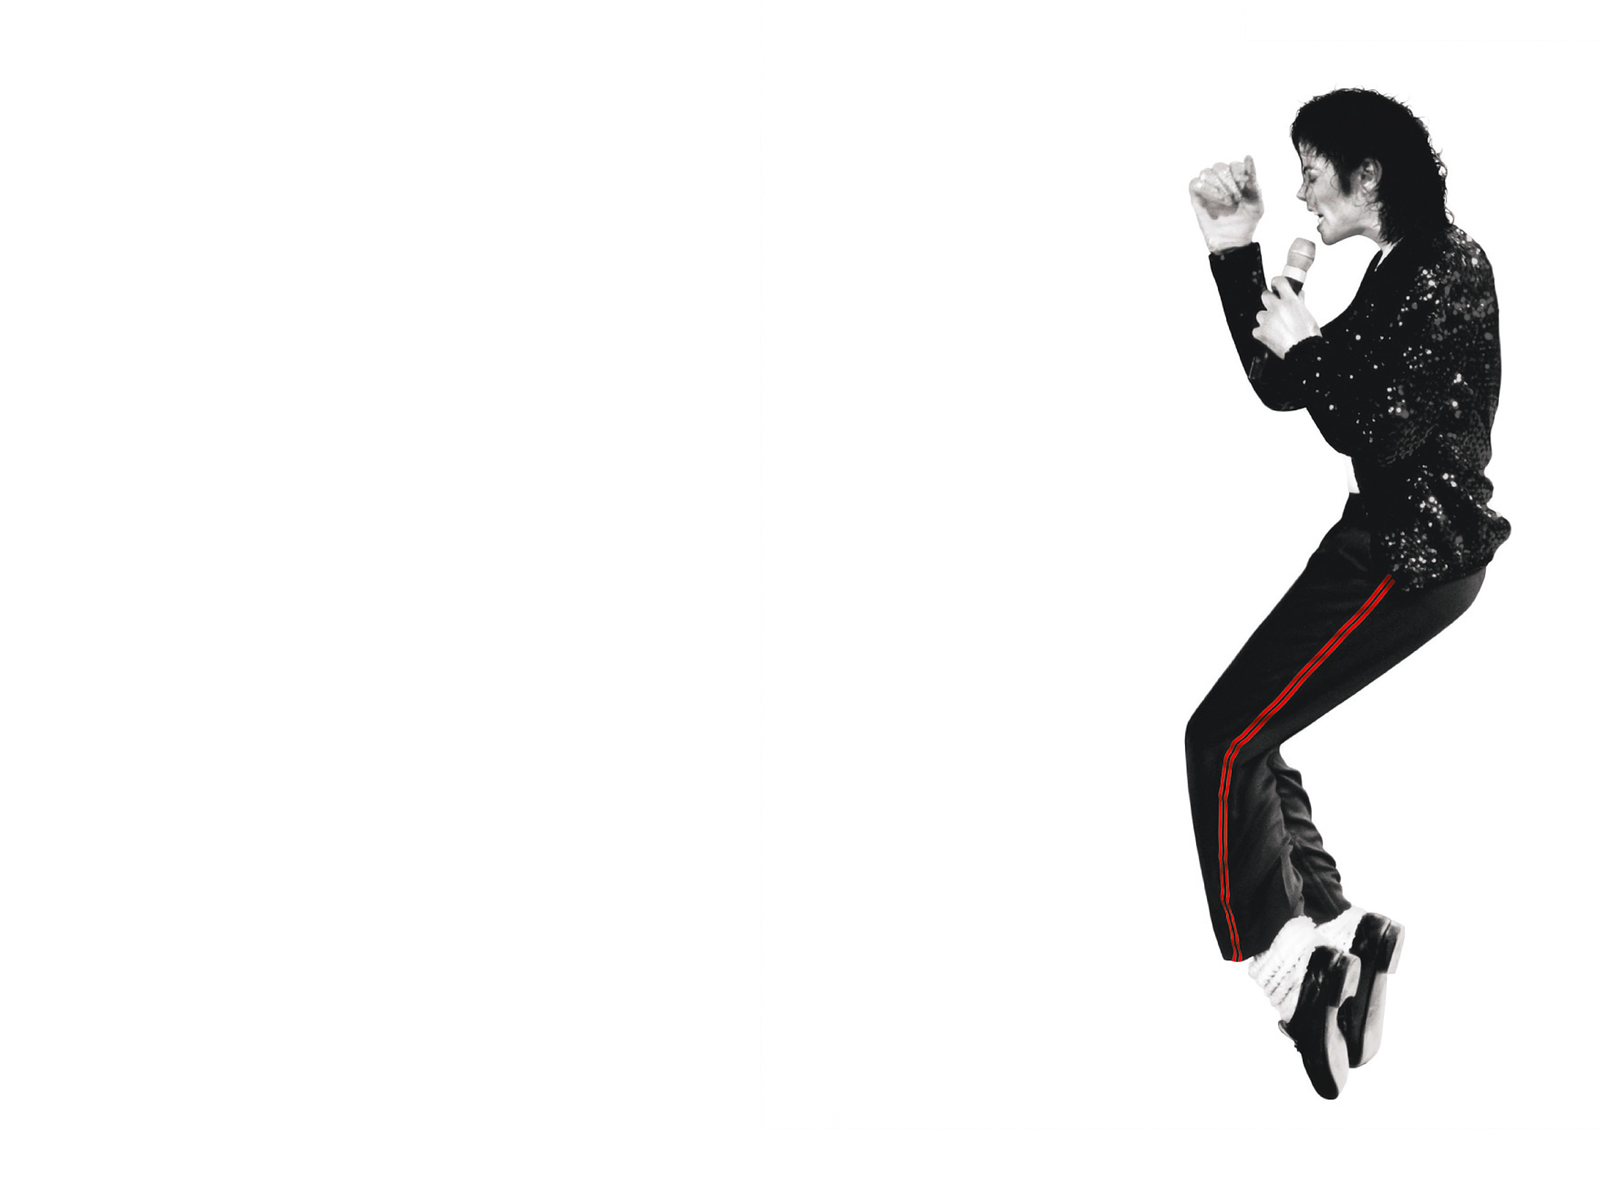 Michael jackson dancing